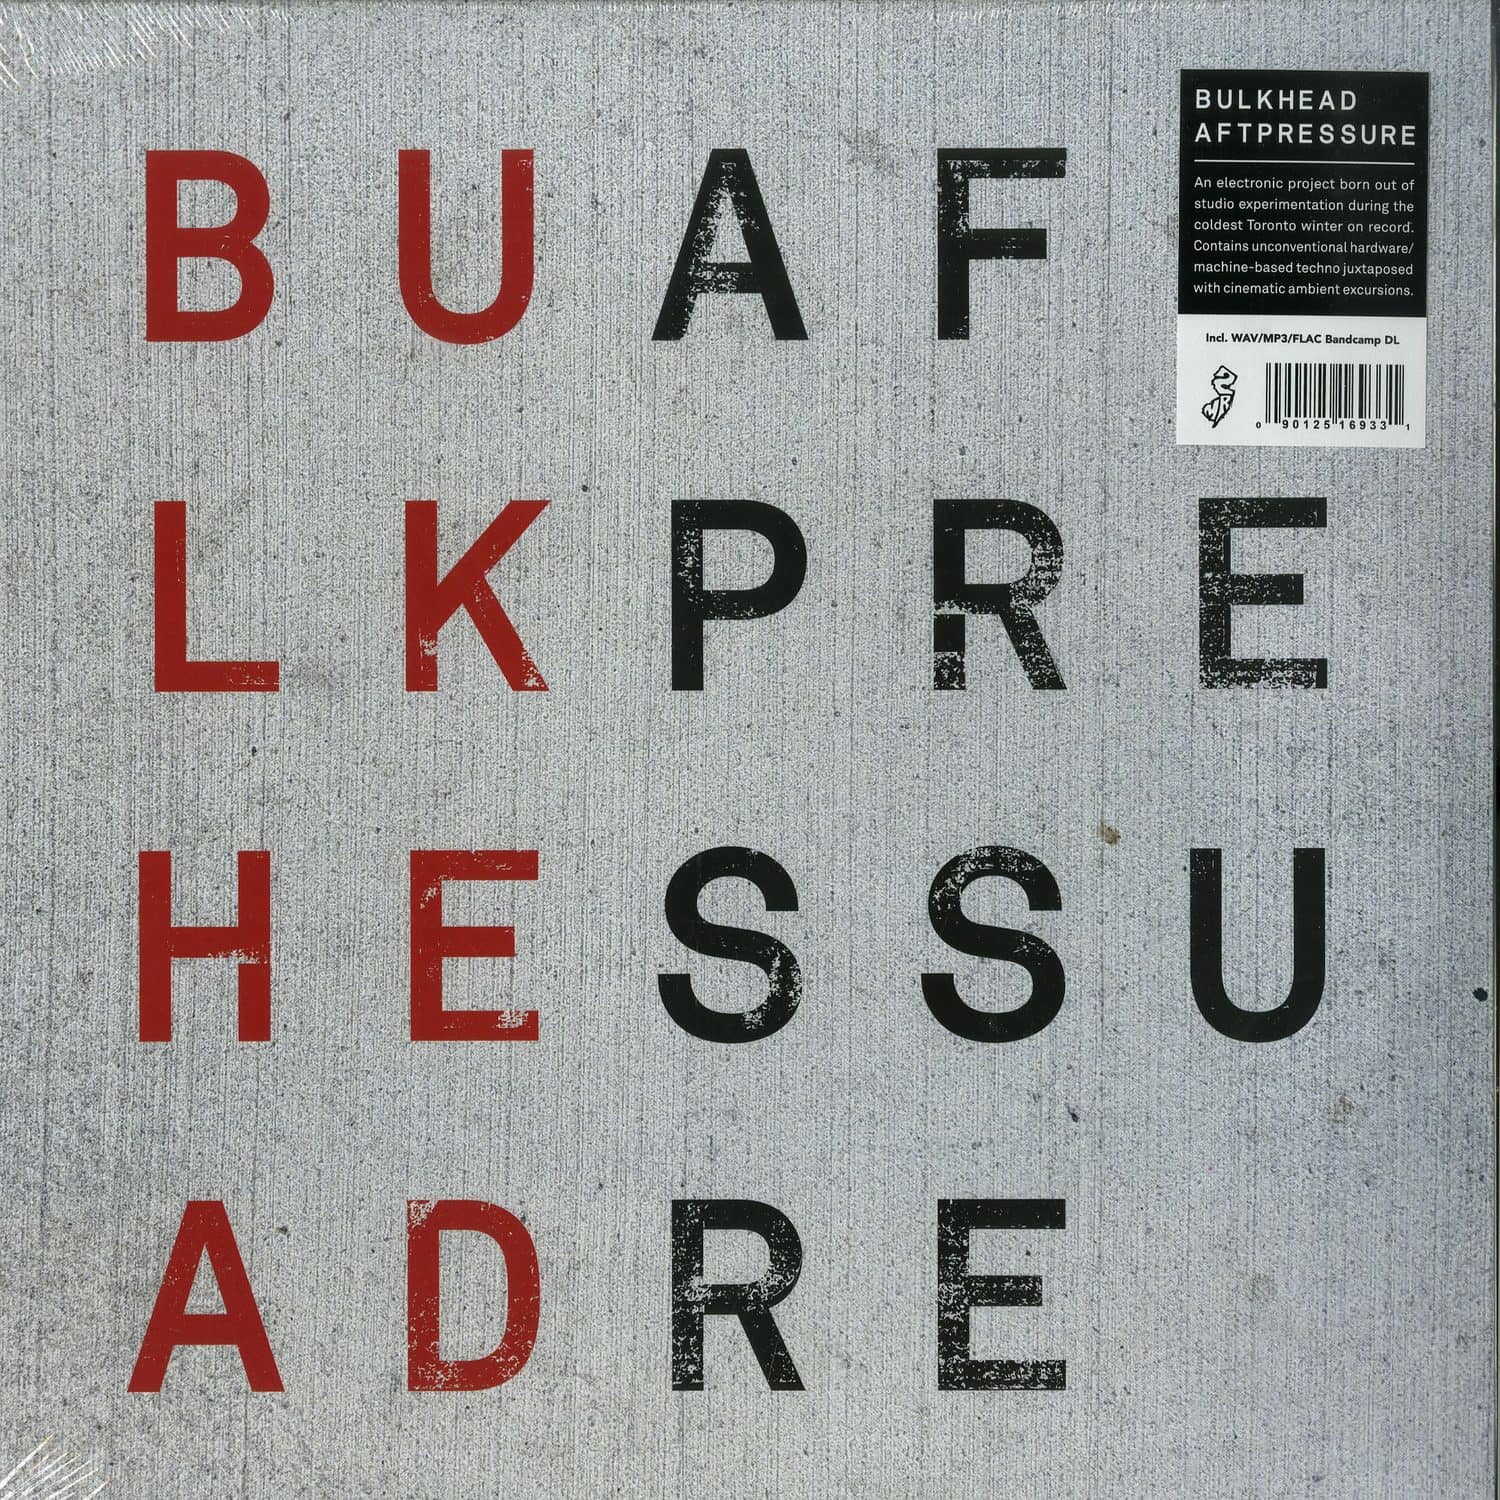 Bulkhead - AFT PRESSURE 